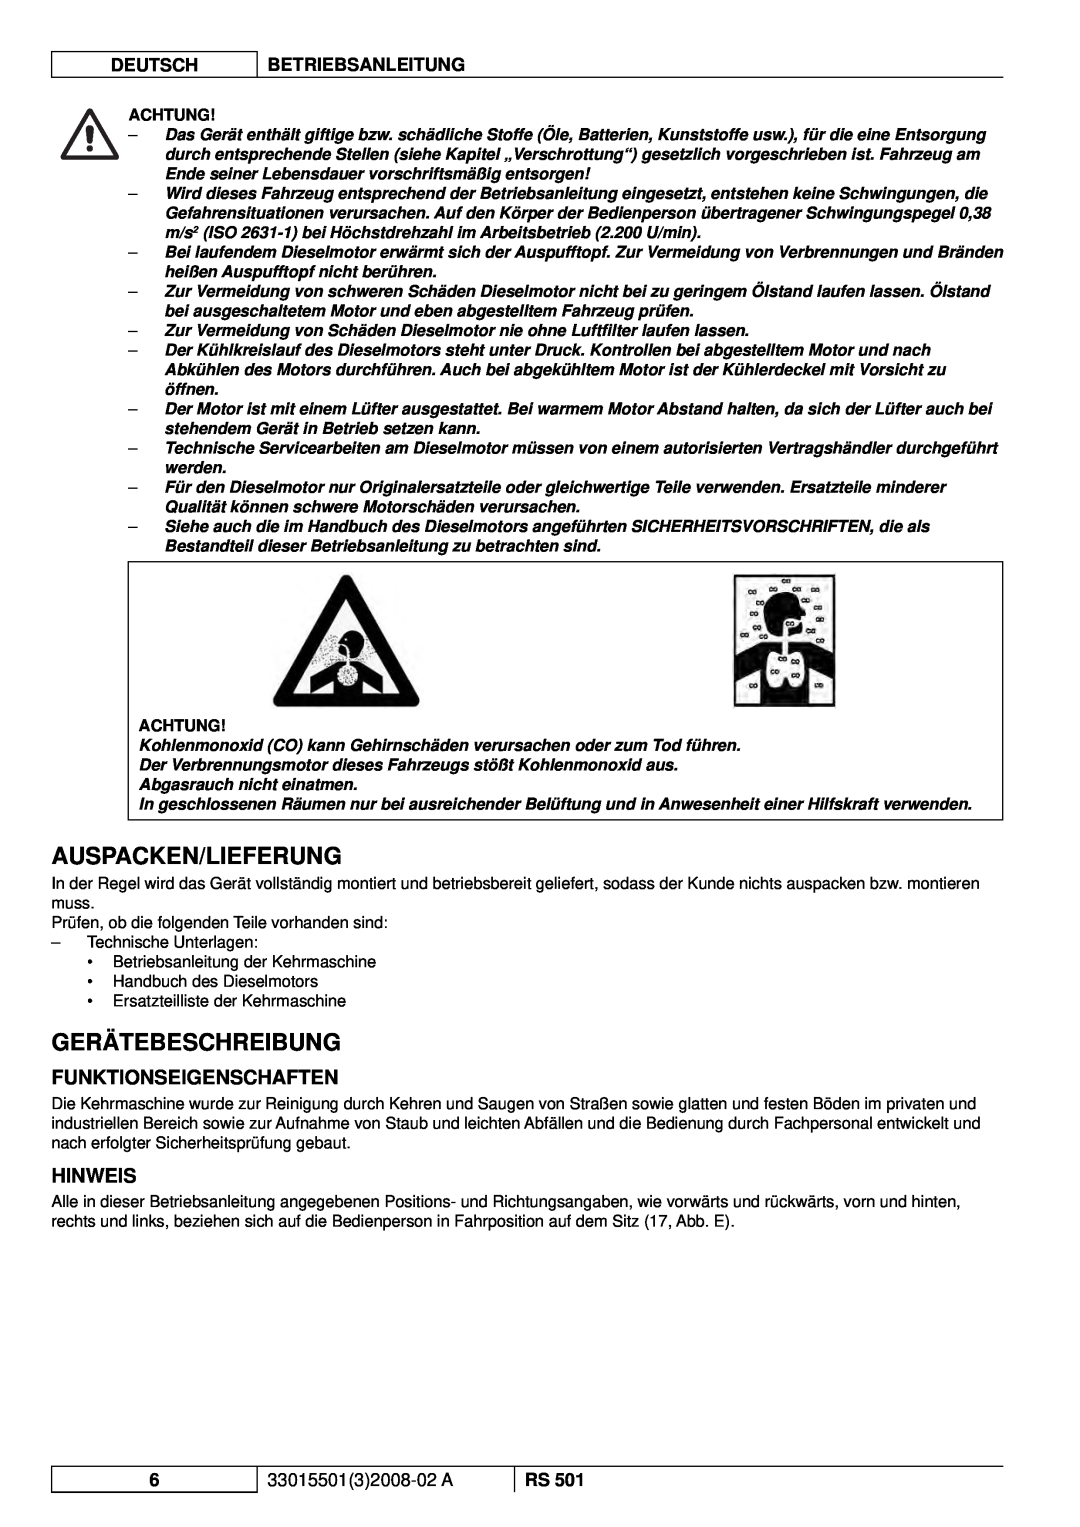 Nilfisk-ALTO RS 501 Auspacken/Lieferung, Gerätebeschreibung, Funktionseigenschaften, Hinweis, Deutsch, Betriebsanleitung 